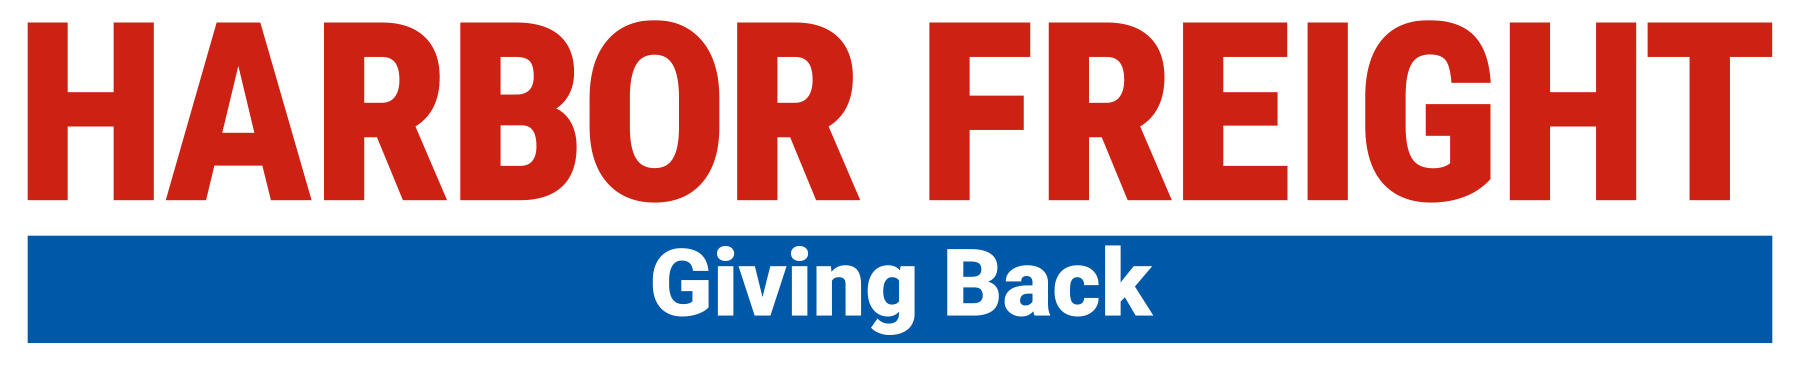 Harbor Freight Giving Back Logo